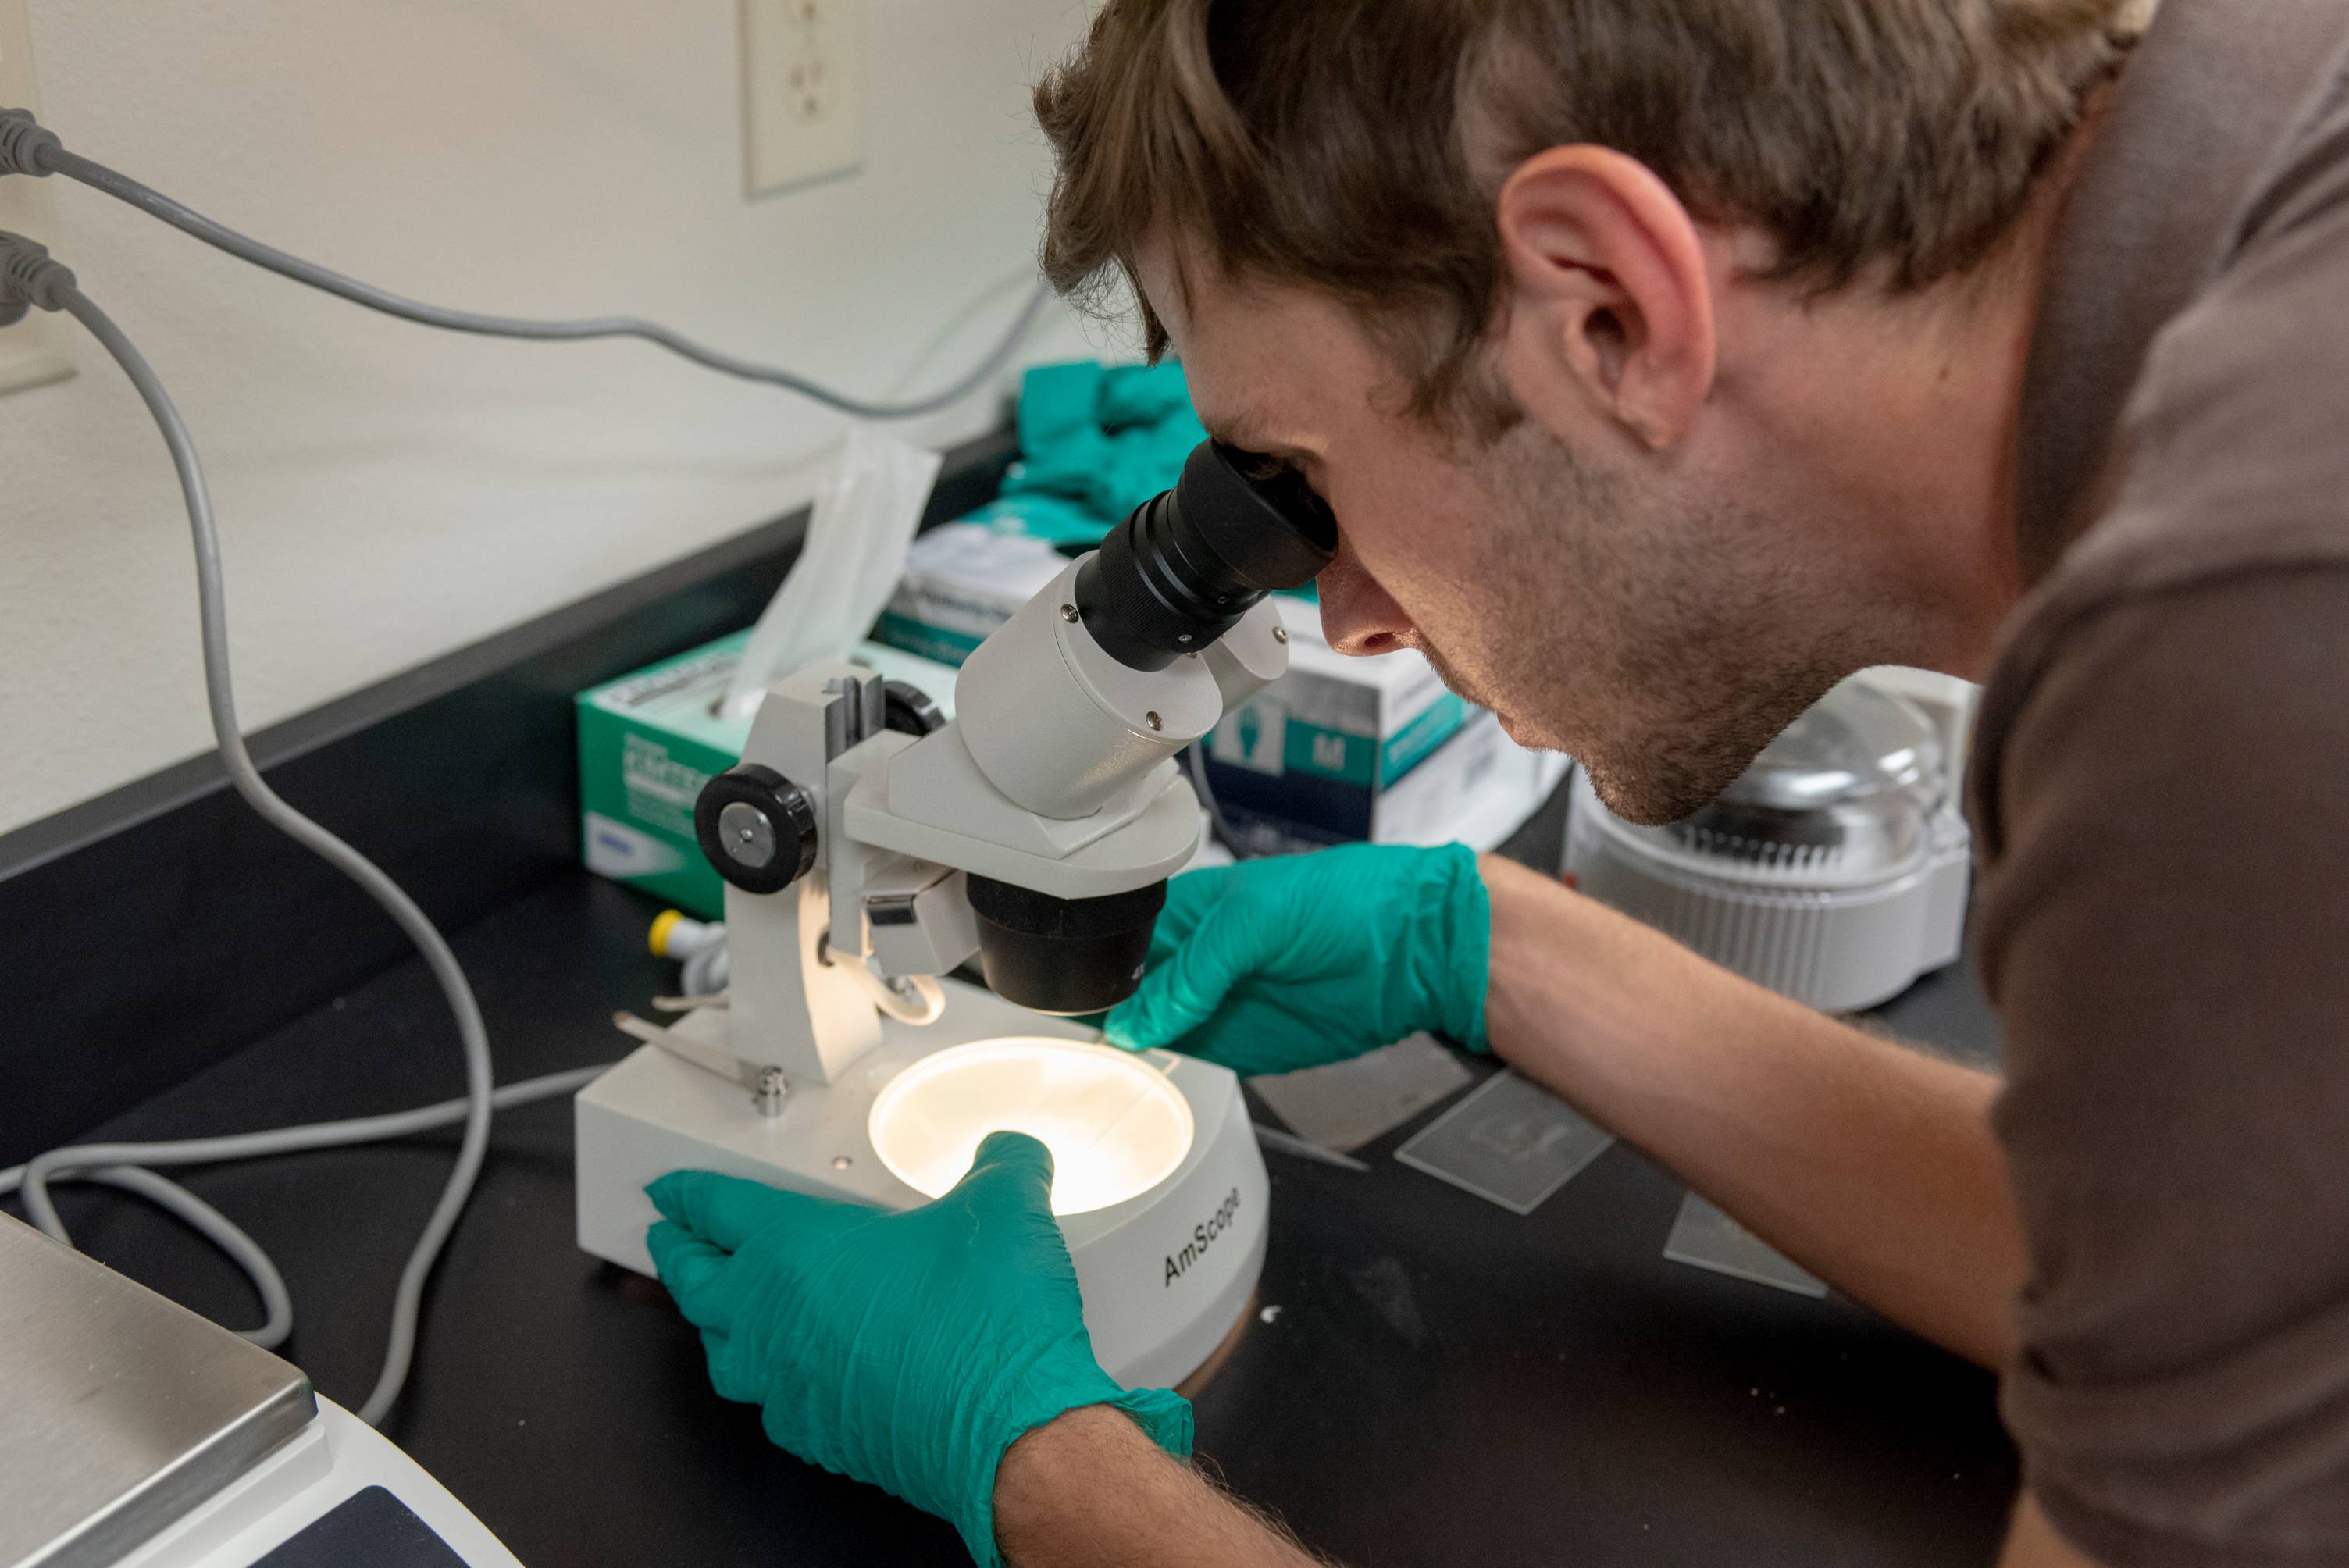 student gazes into lit microscope